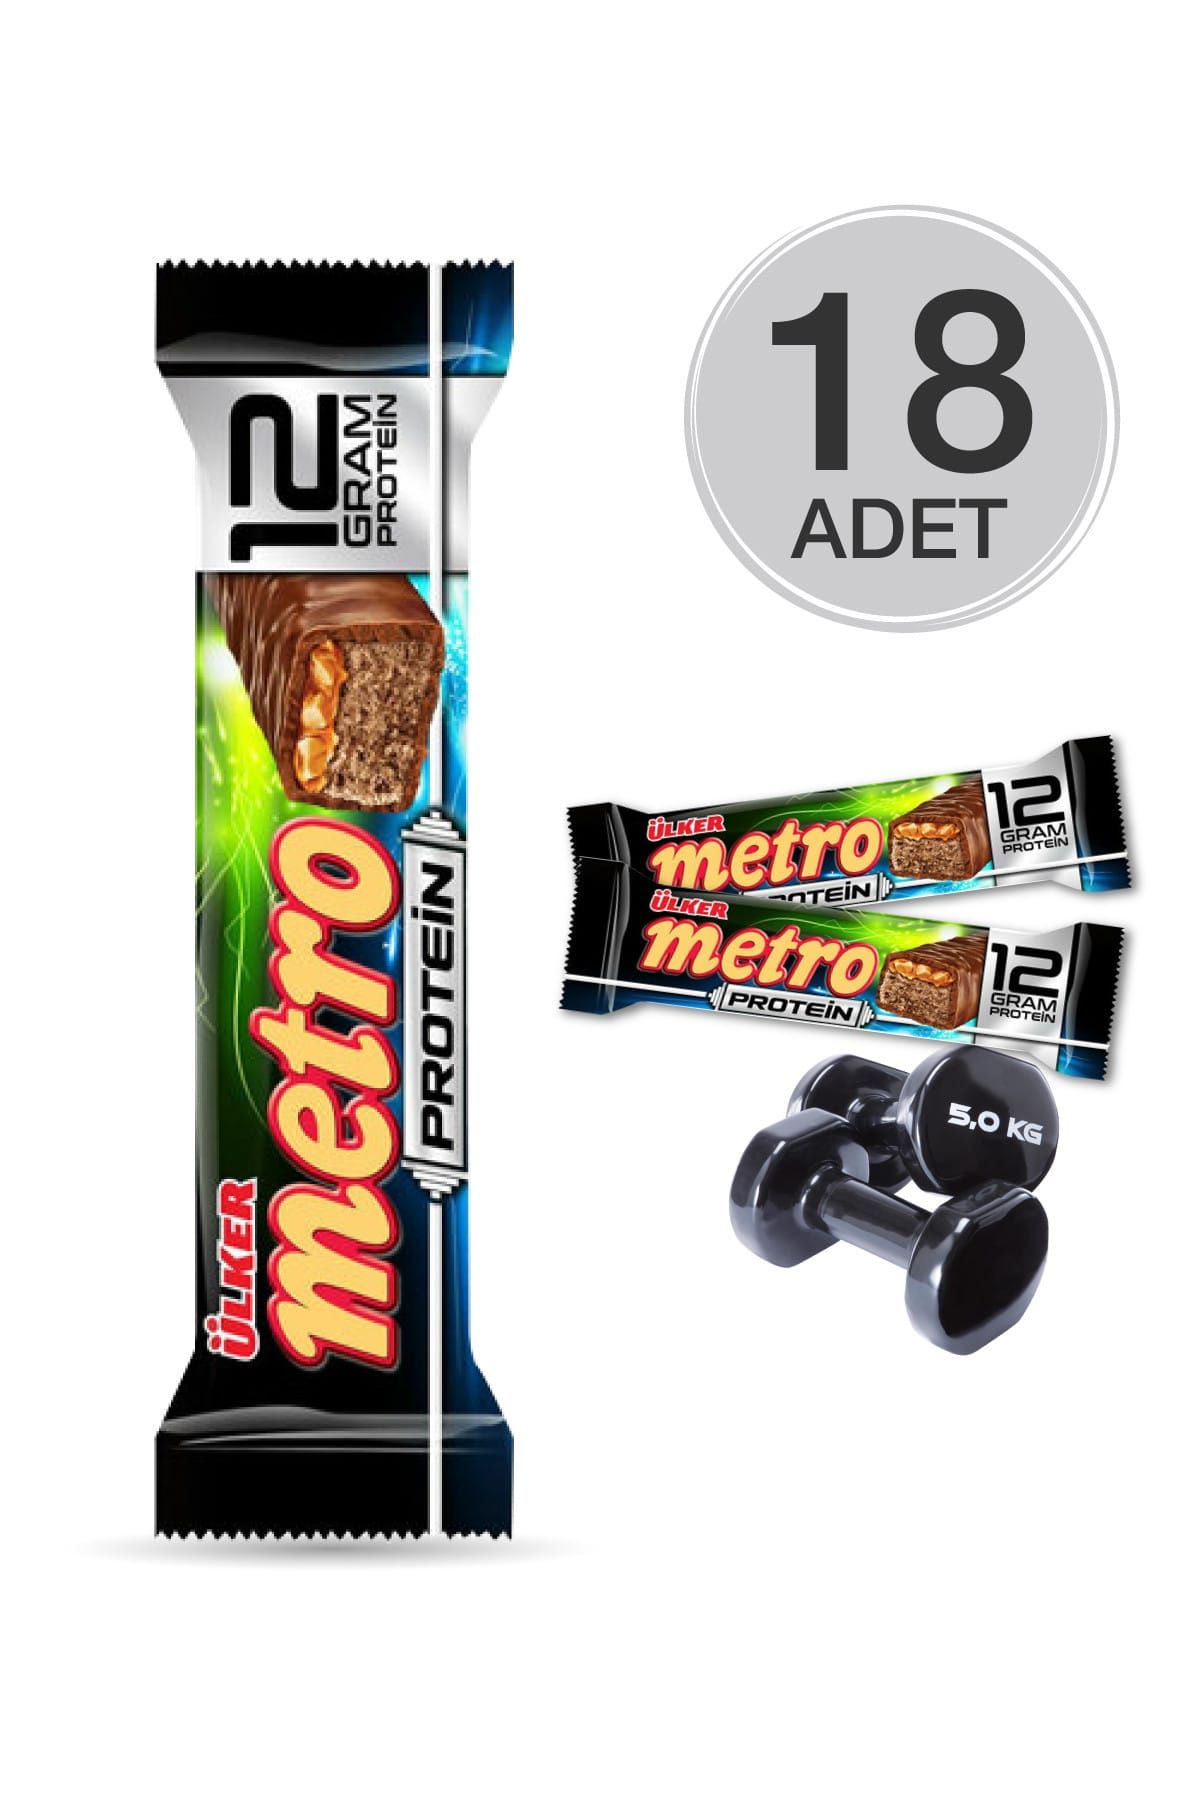 Ülker Metro Protein Bar 50 gr